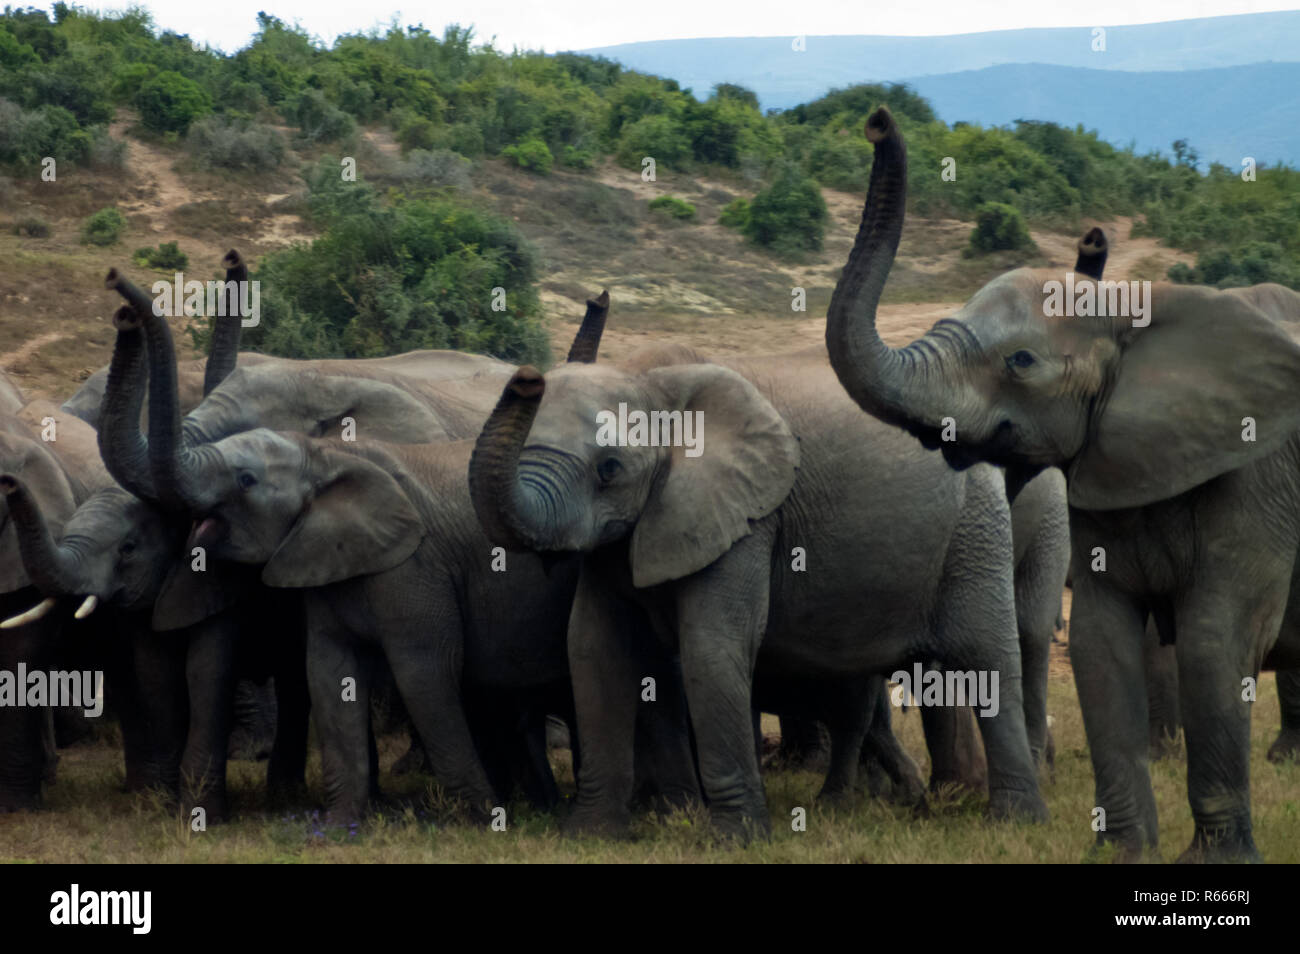 Elephants greeting the rain Stock Photo